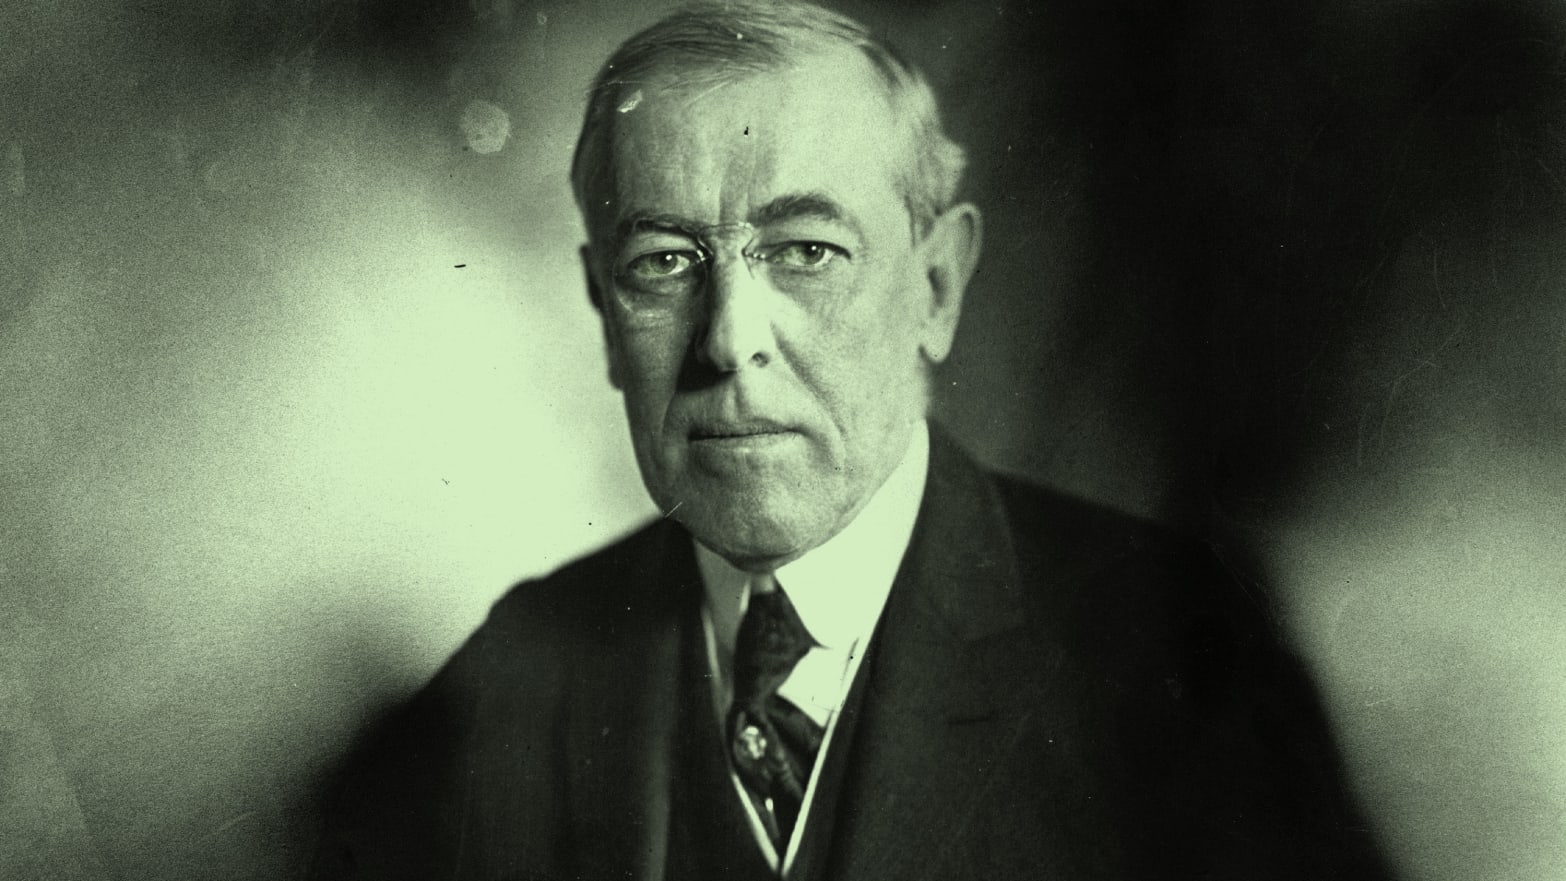 A photo including a former U.S. President Woodrow Wilson